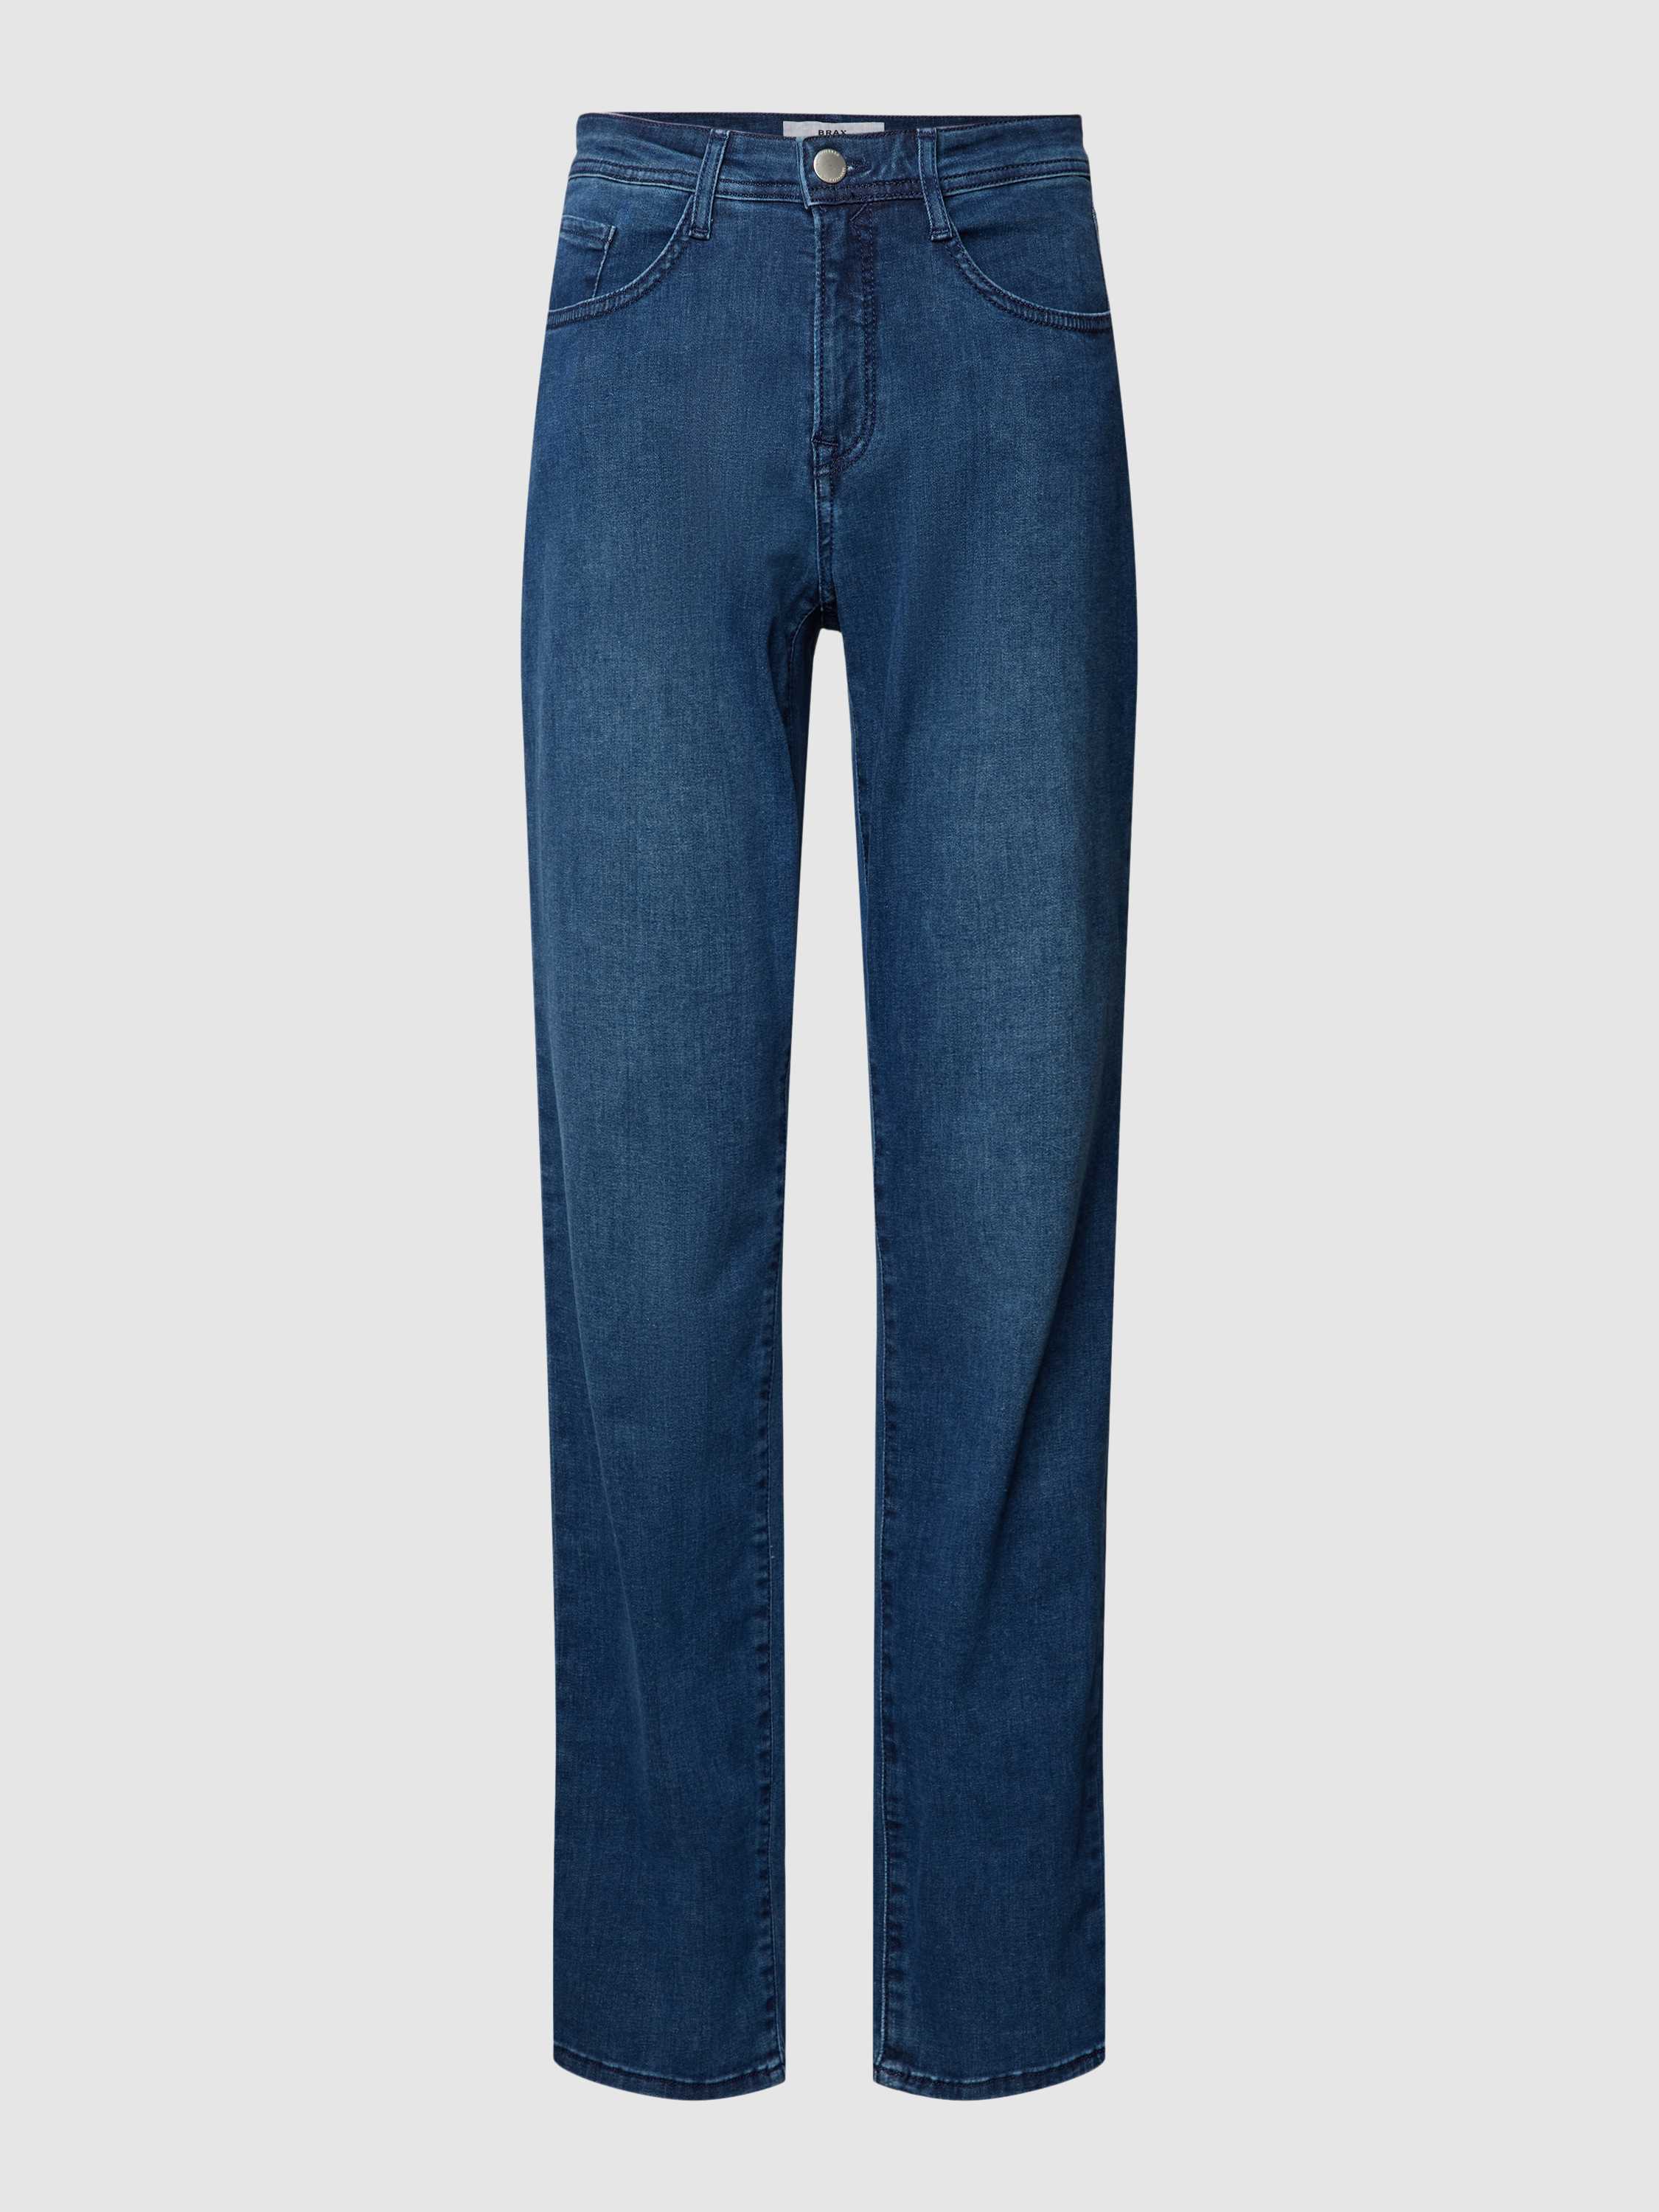 Jeans mit 5-Pocket-Design Modell 'Carola'